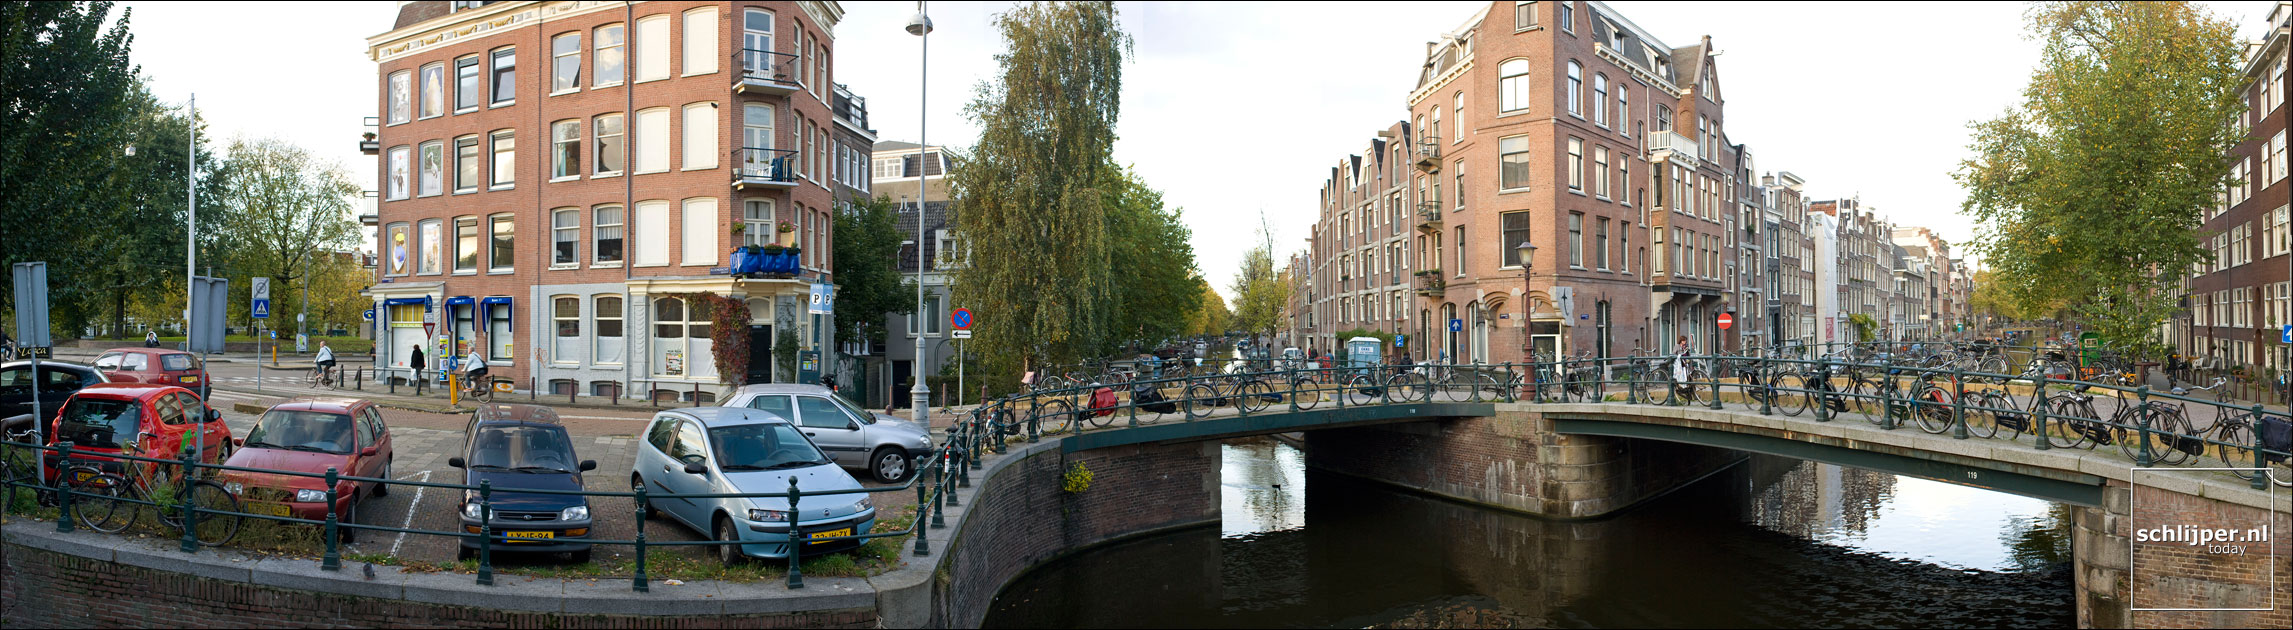 Nederland, Amsterdam, 17 oktober 2008